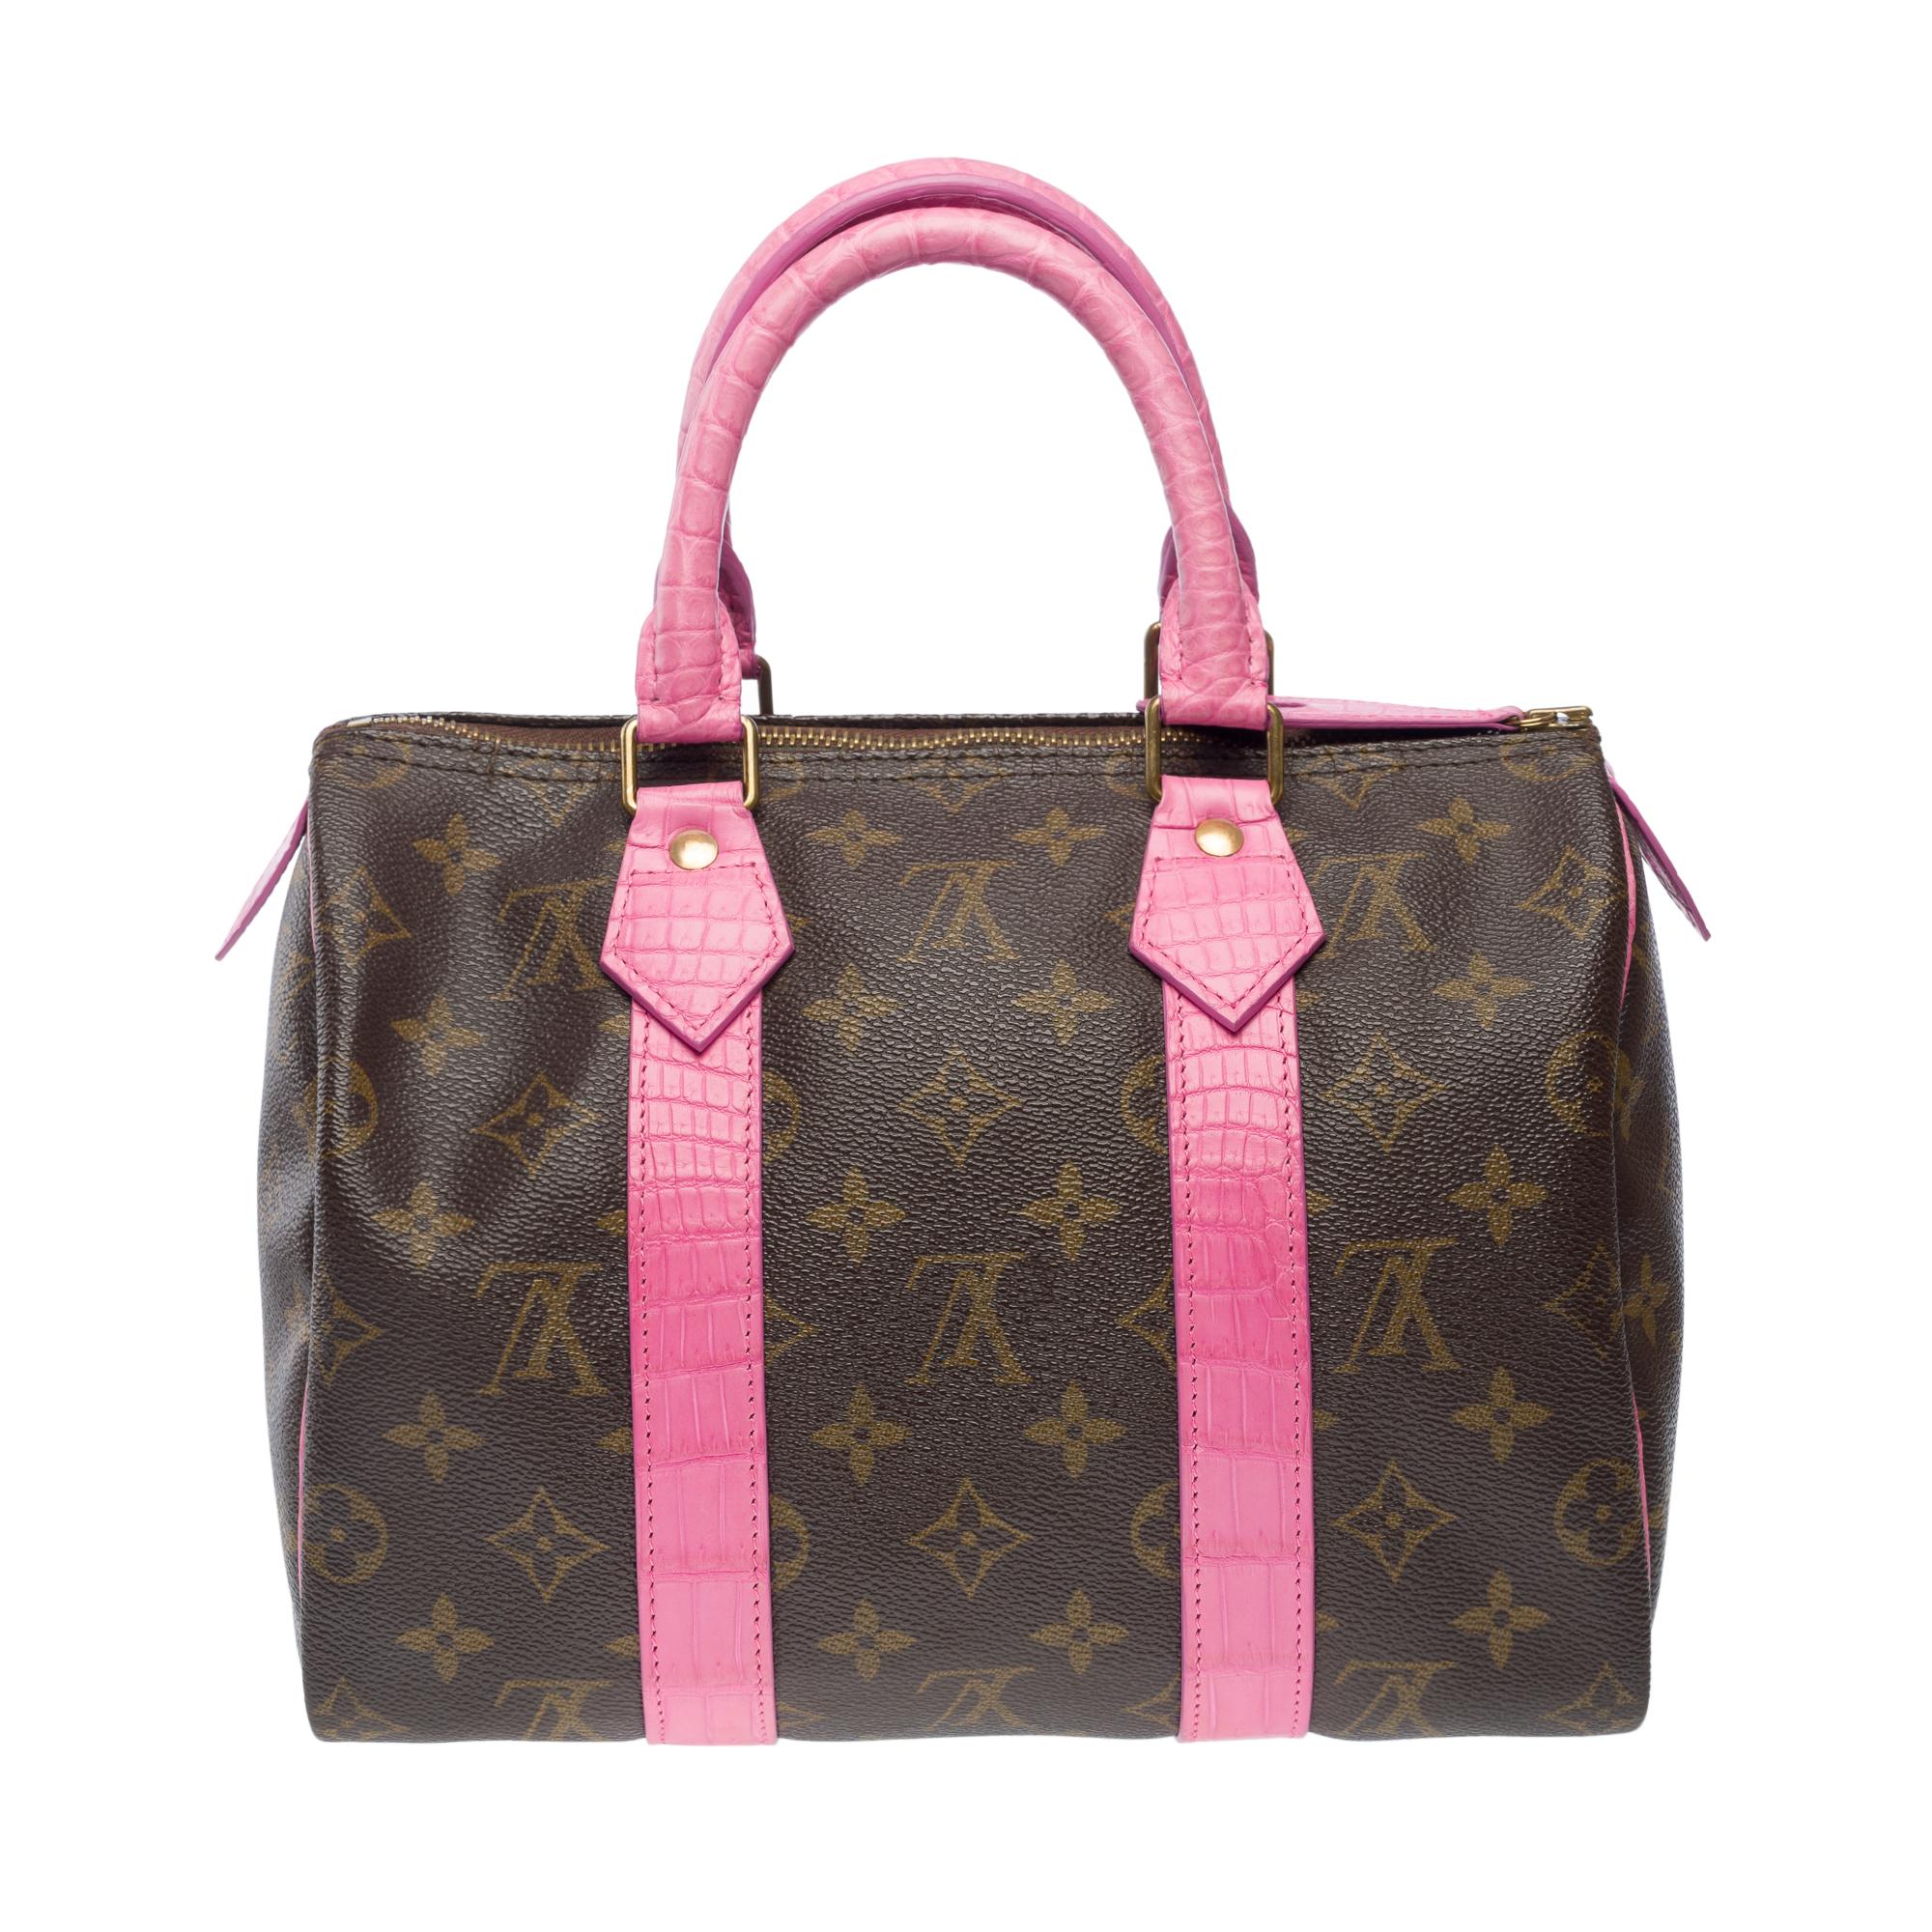 Women's or Men's Customized Louis Vuitton Speedy 25 handbag Flowers with Pink Crocodile leather